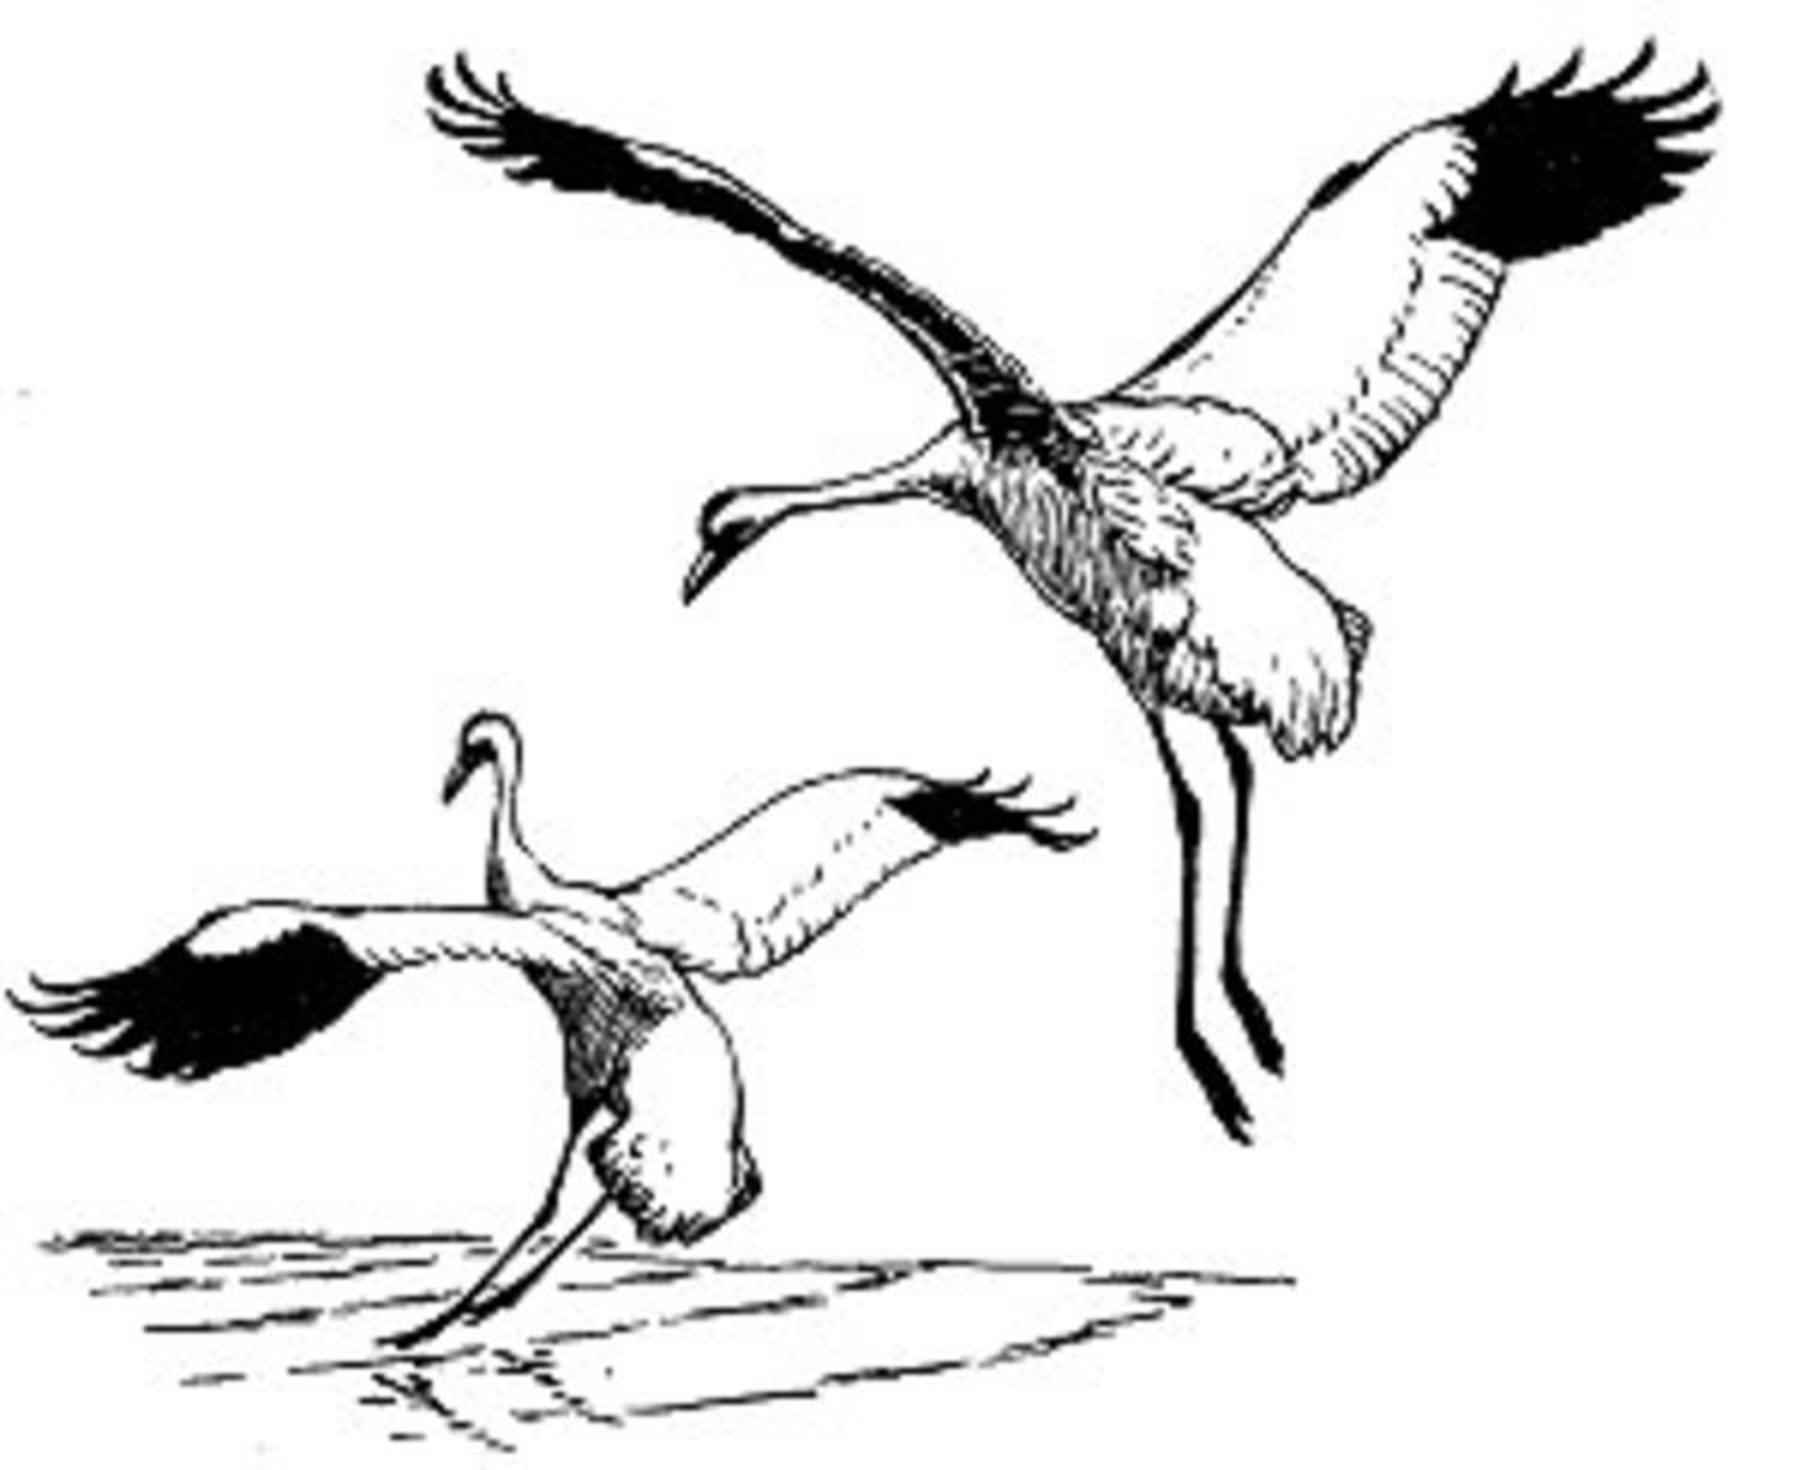 File:Whooping cranes birds illustration.jpg